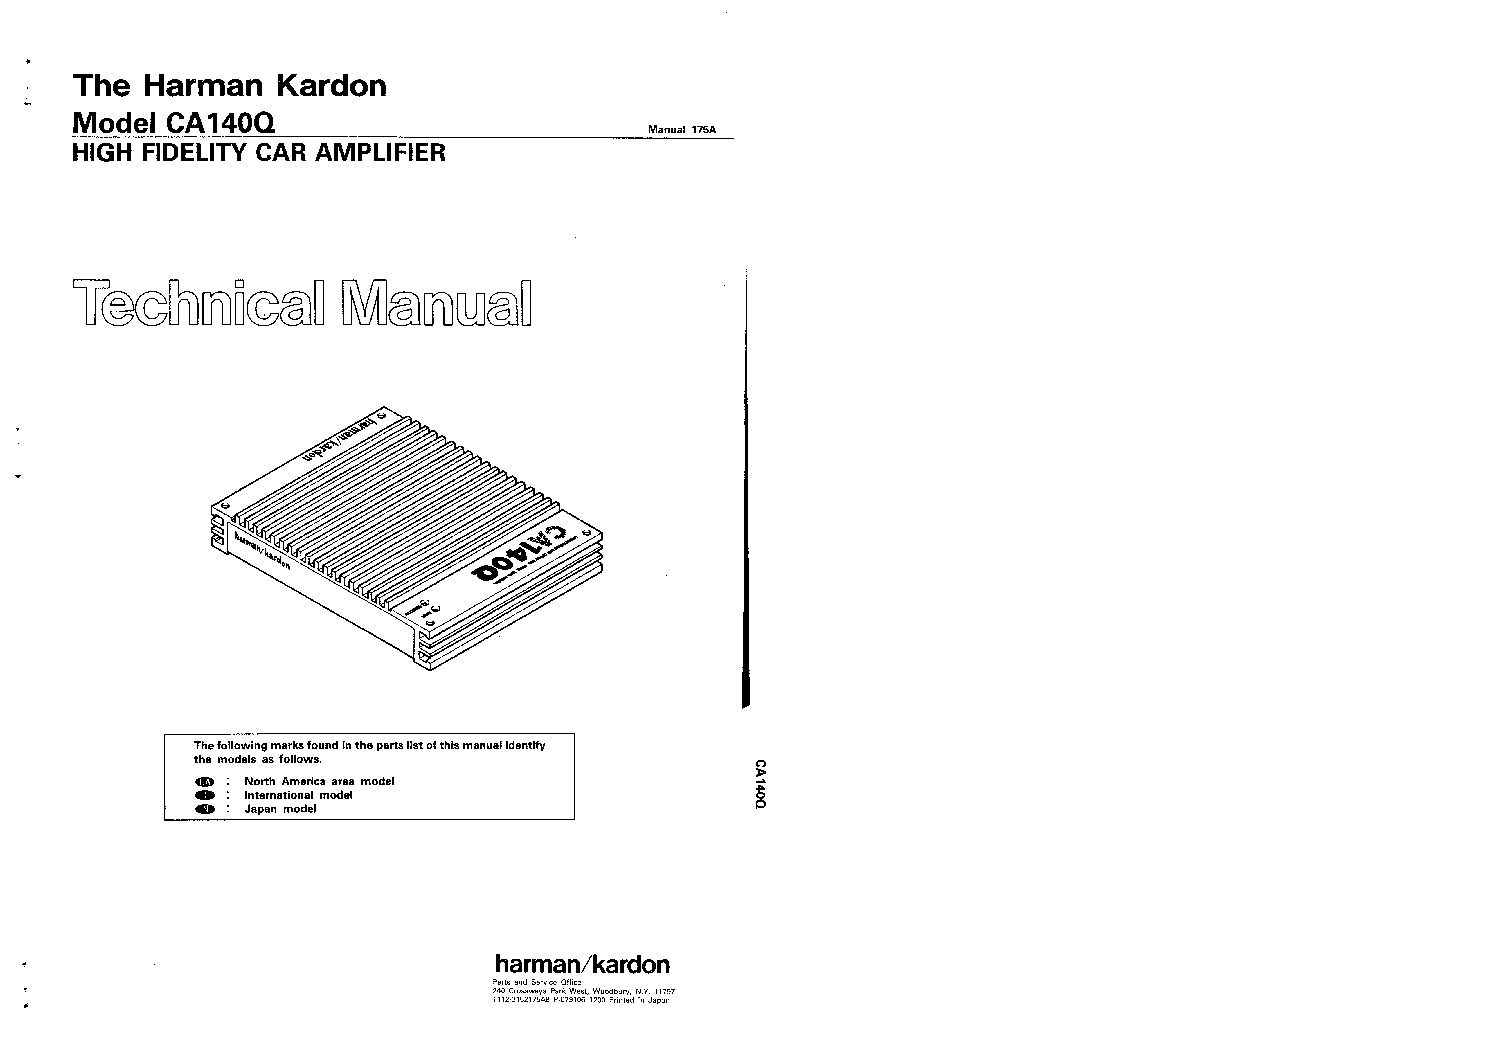 Harman kardon service manuals